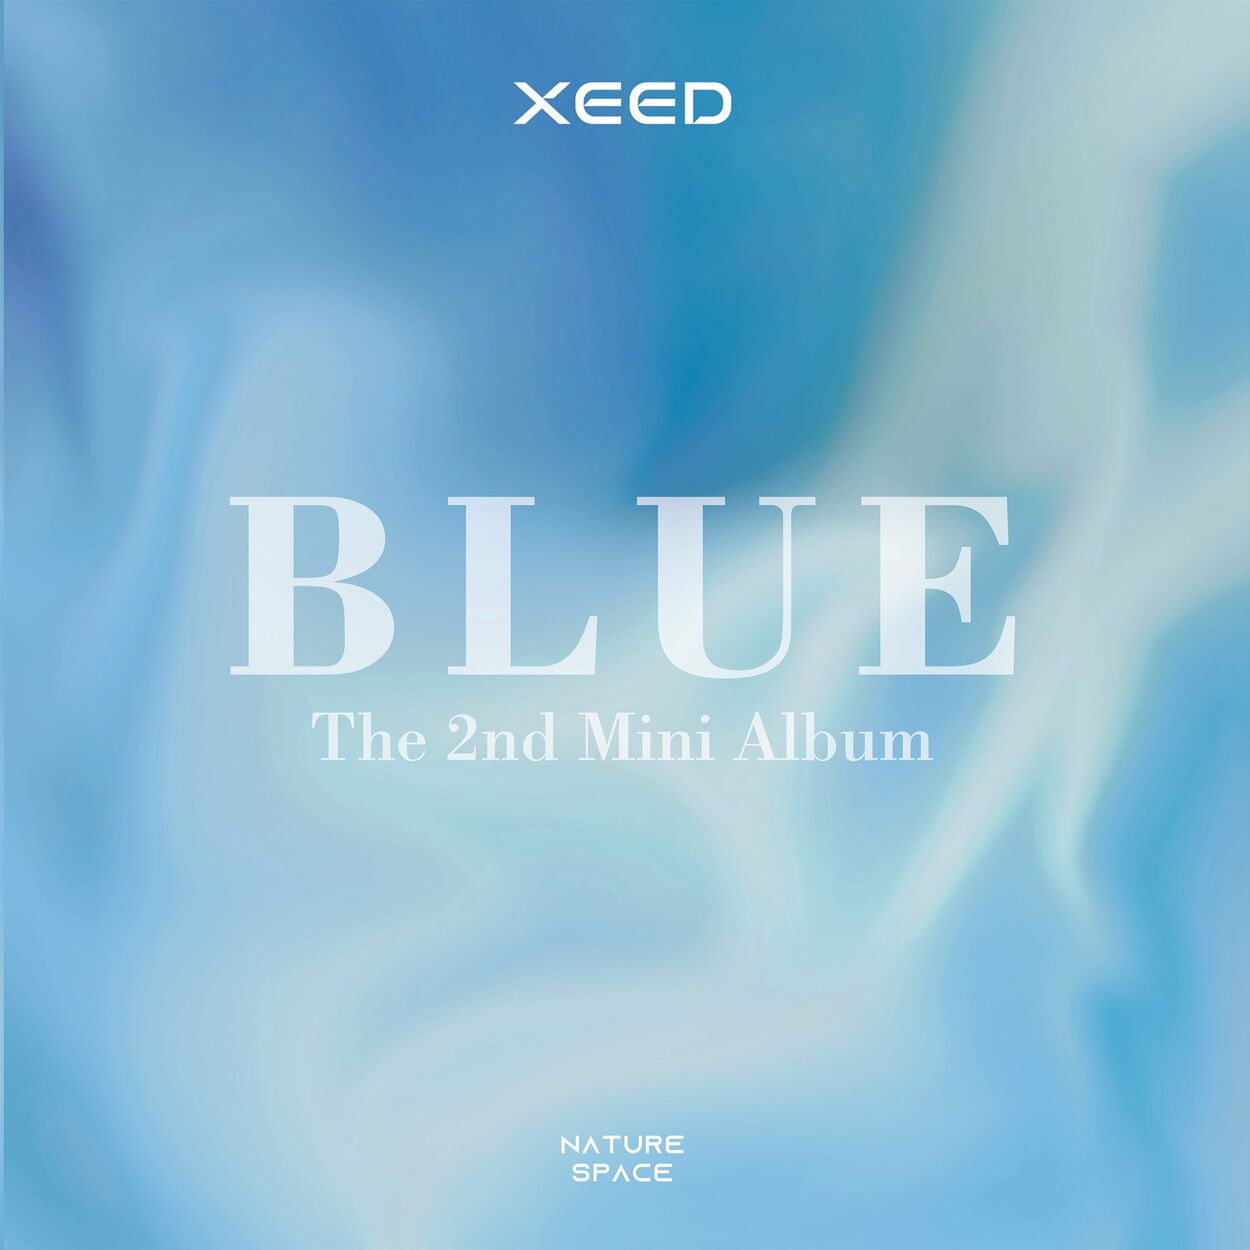 XEED – BLUE – EP